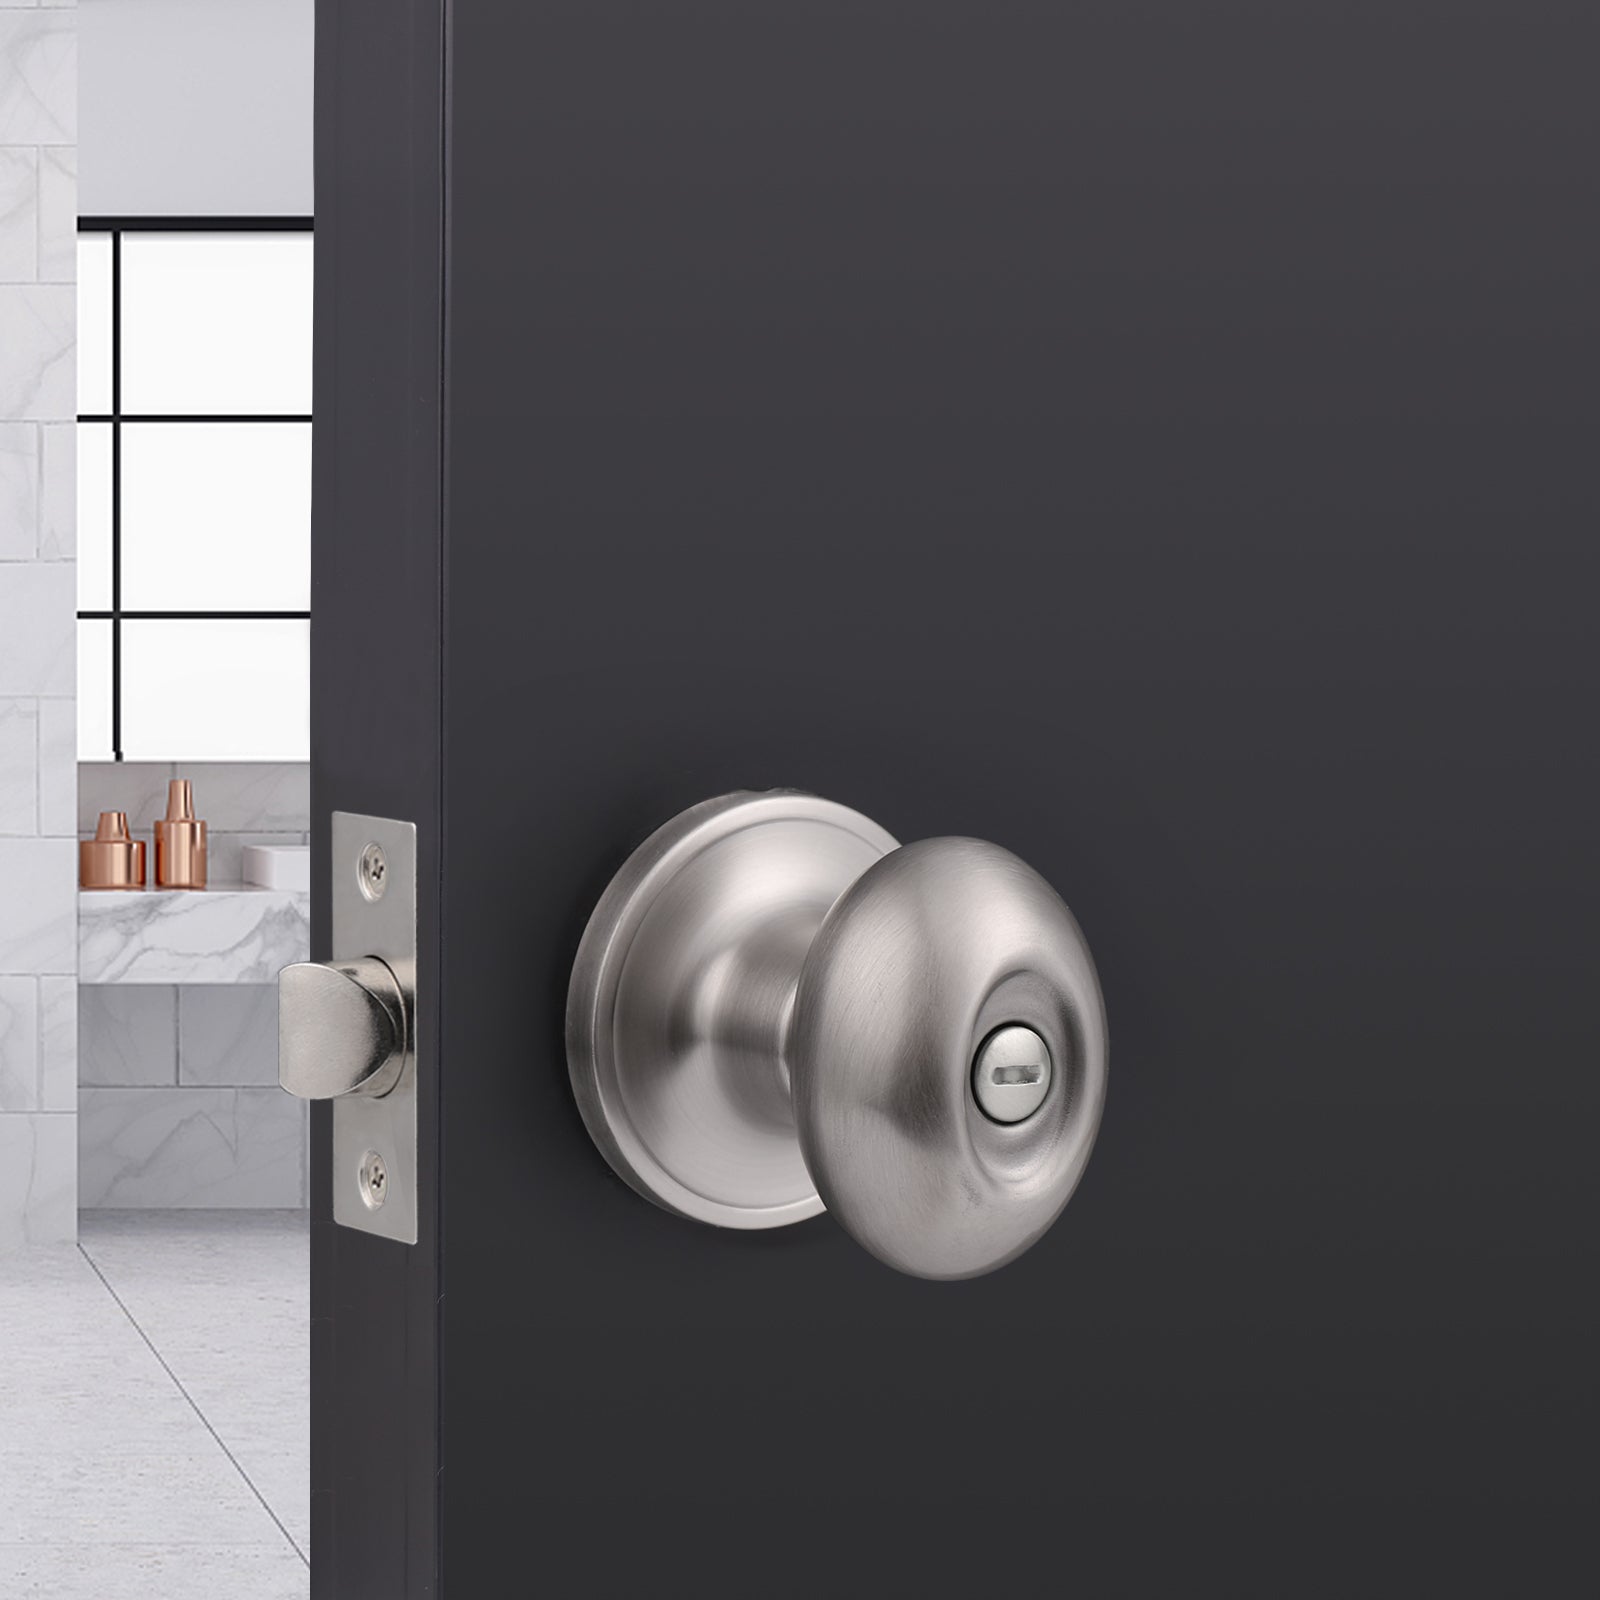 Privacy Door Knobs Bedroom/Bathroom Door Lock set No Key Egg Knob Style Satin Nickel Finish DL692SNBK